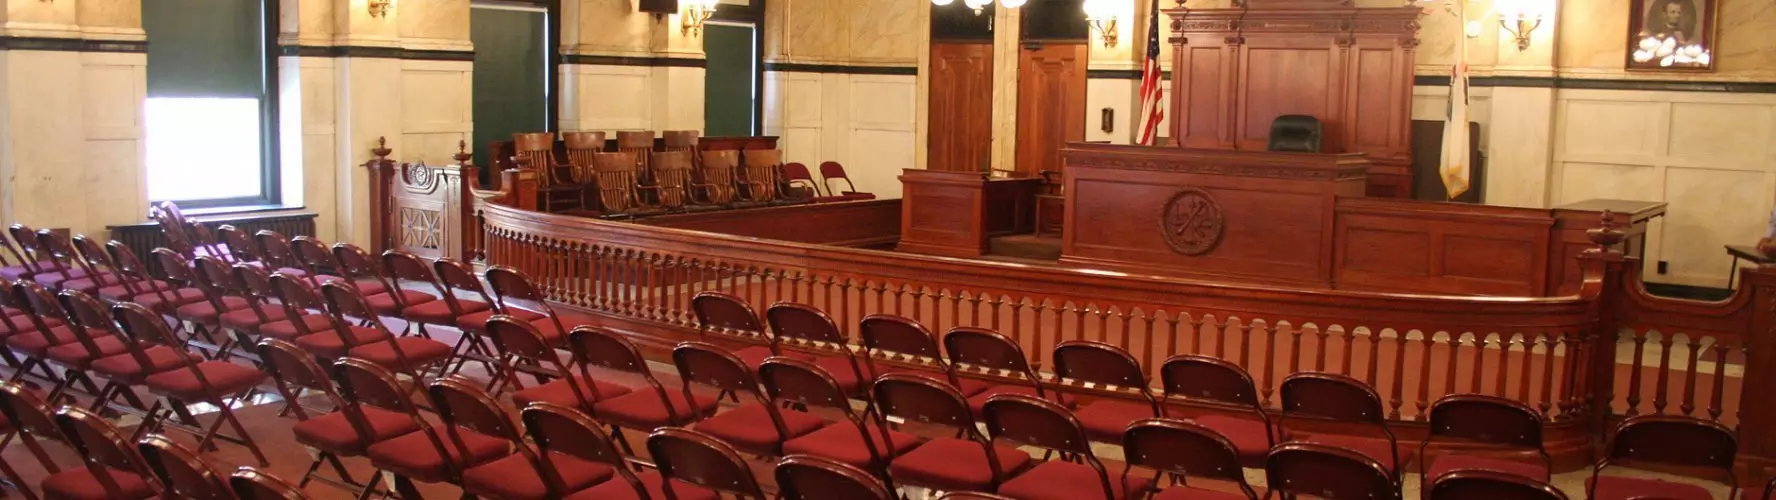 Governor Fifer Courtroom